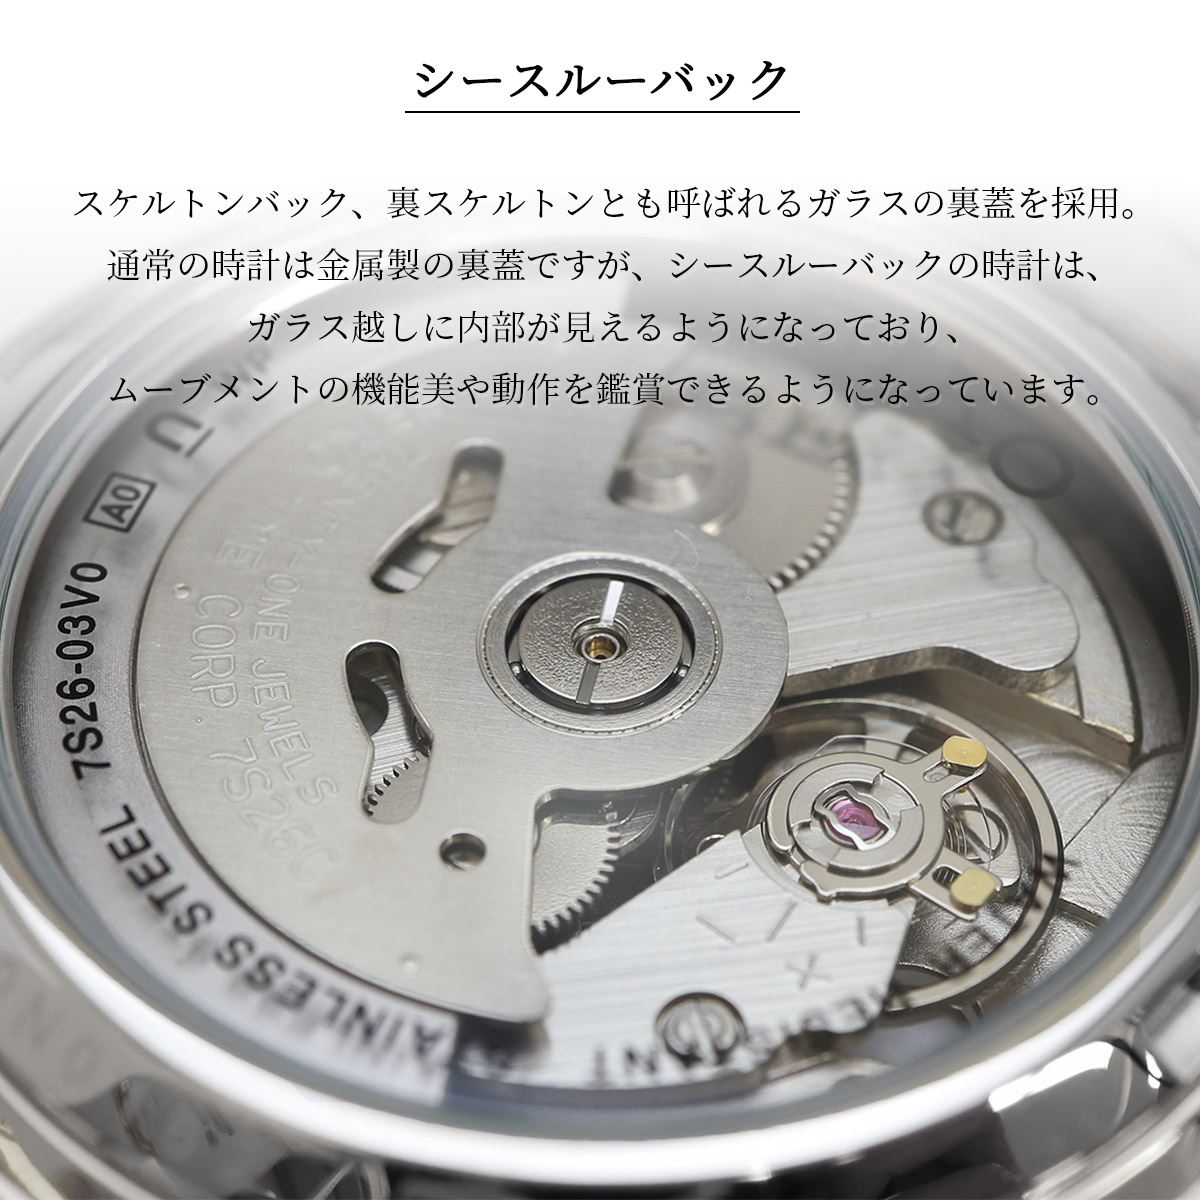 SEIKO セイコー 腕時計 メンズ 海外モデル セイコー5 自動巻き 